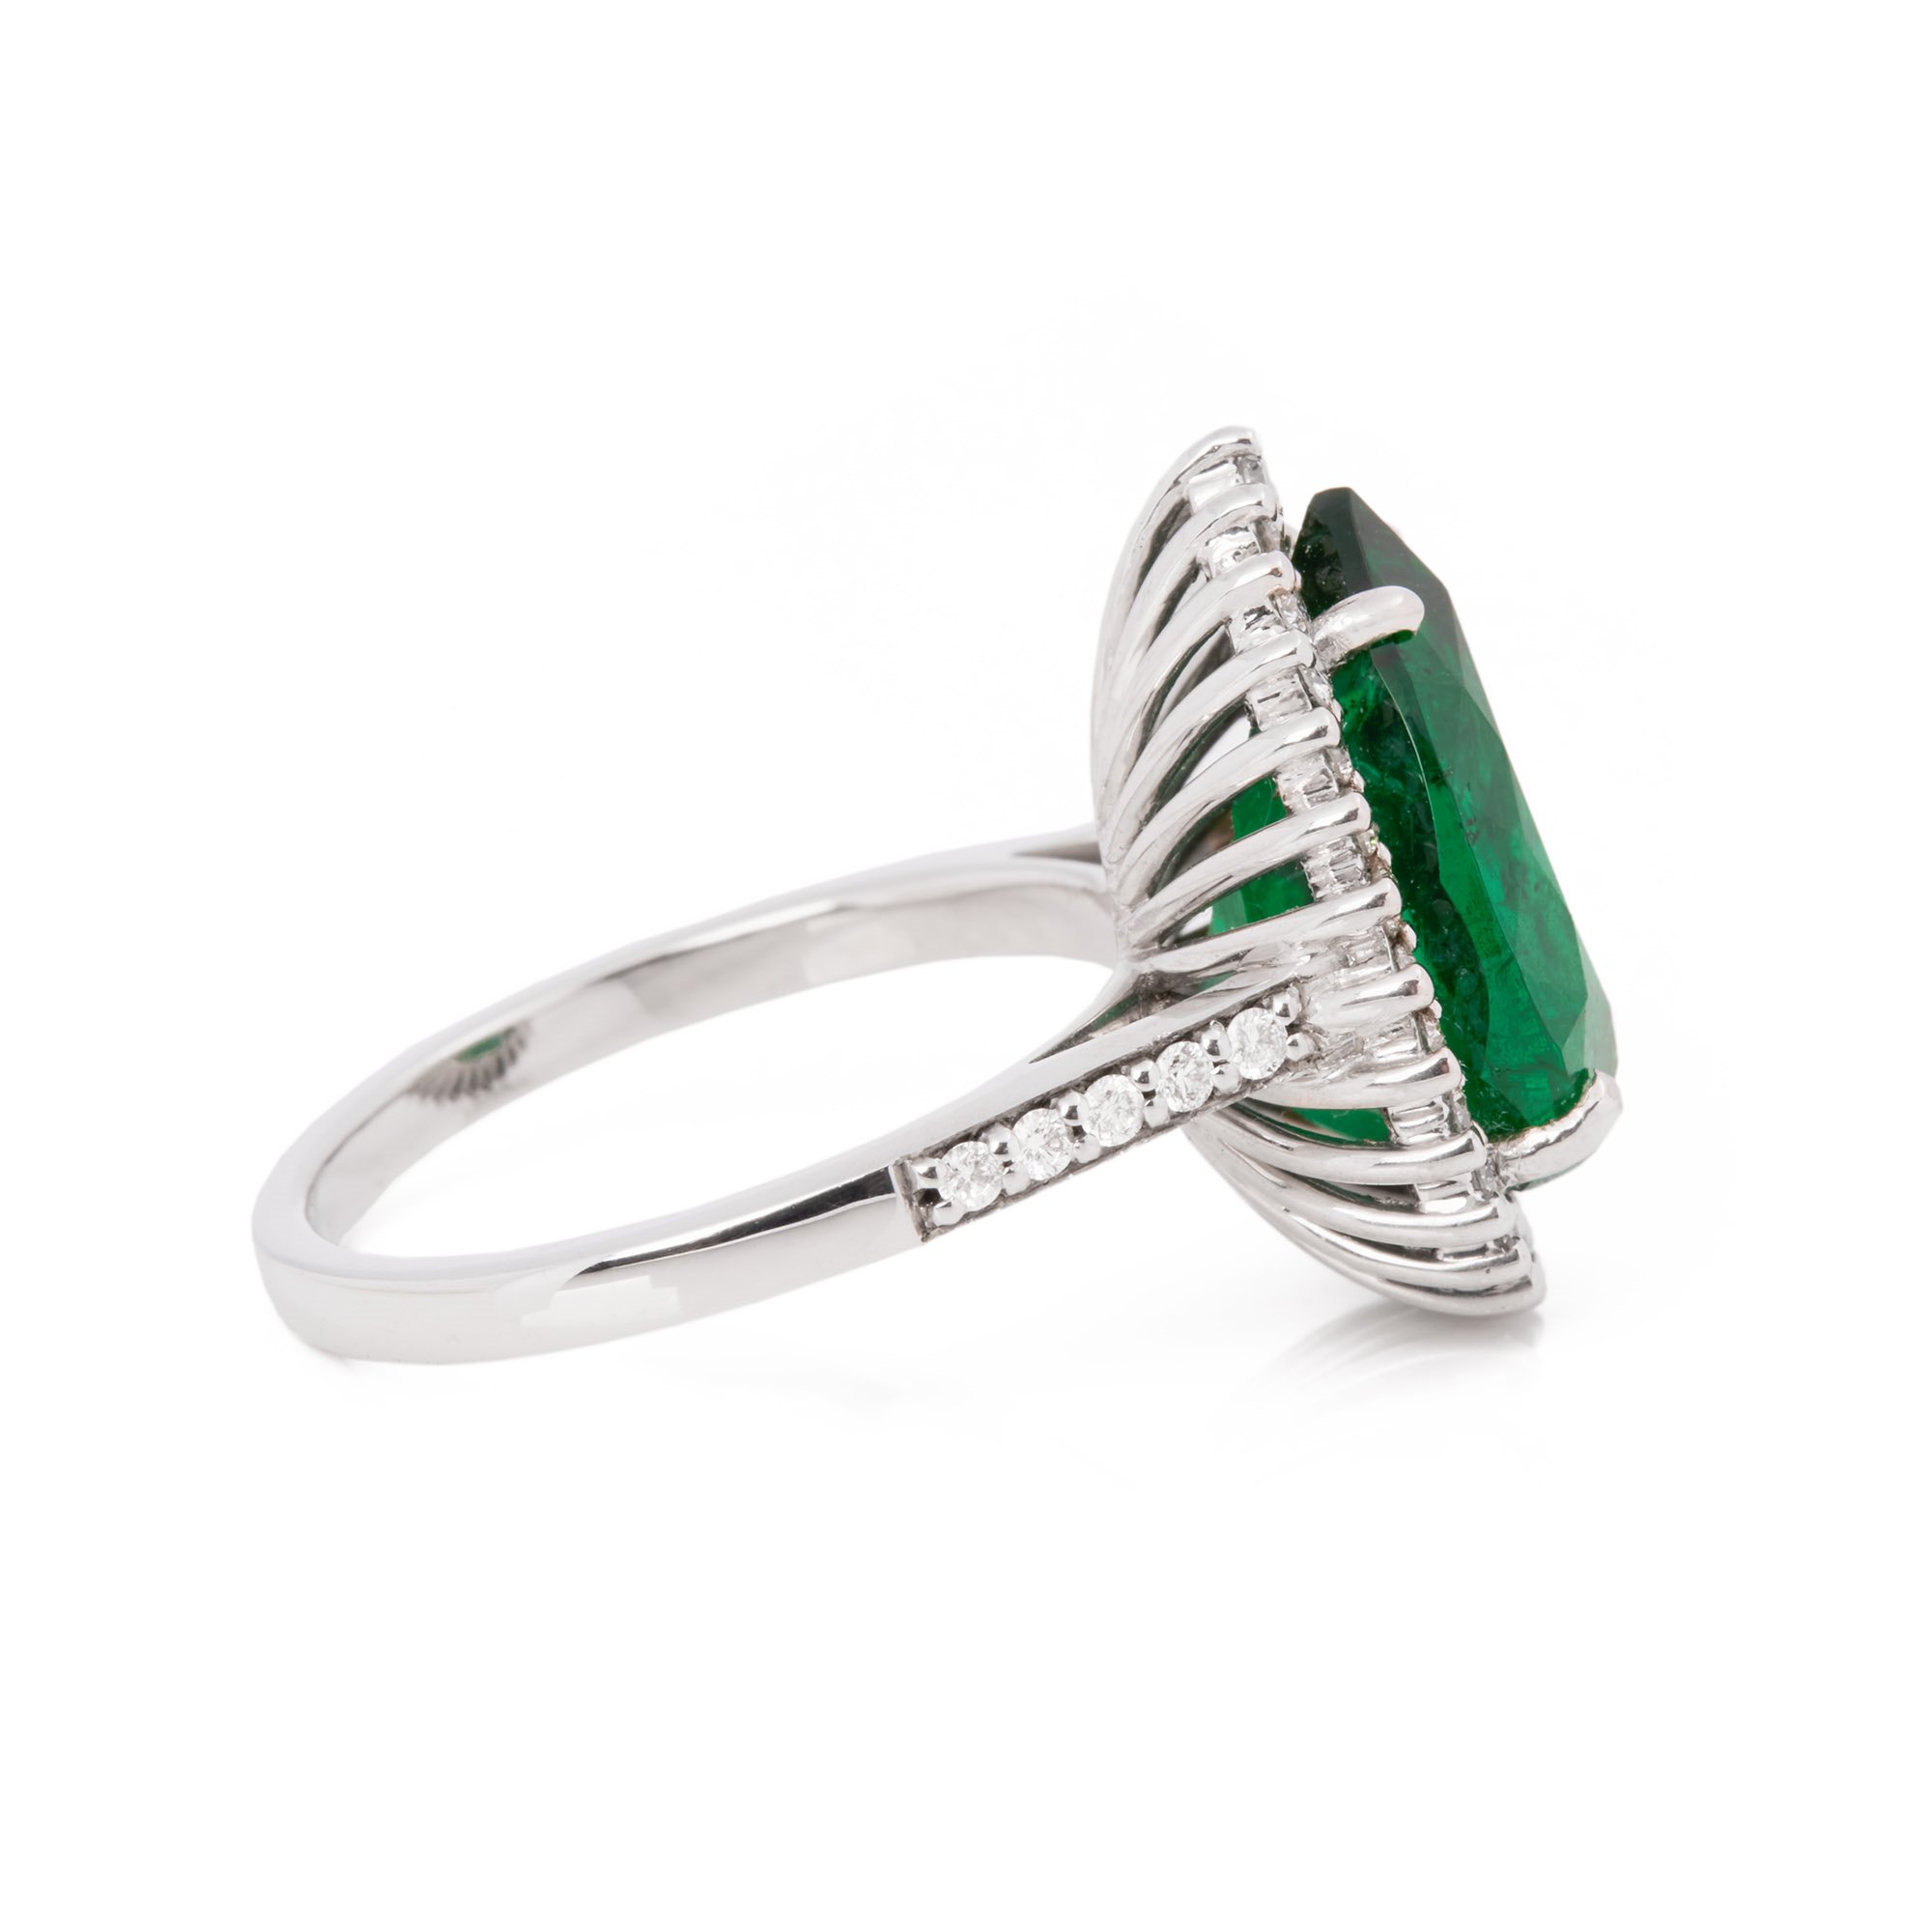 David Jerome Certified 5.92ct Pear Cut Emerald and Diamond Ring